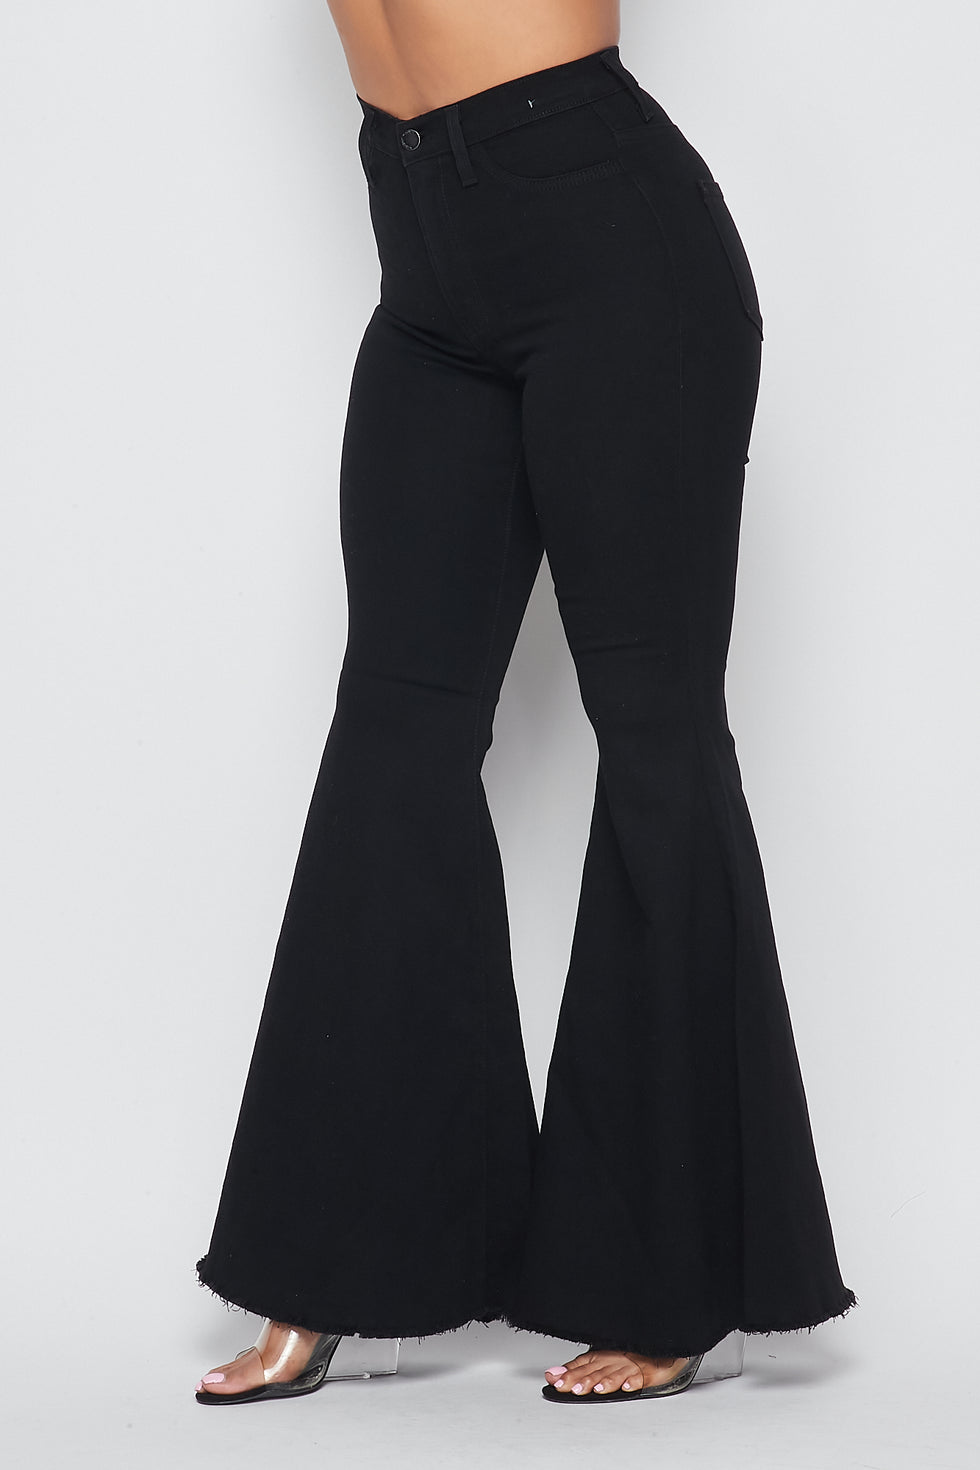 High Waisted Super Flare Bell Bottoms Jeans (1-3XL) - Black – SohoGirl.com